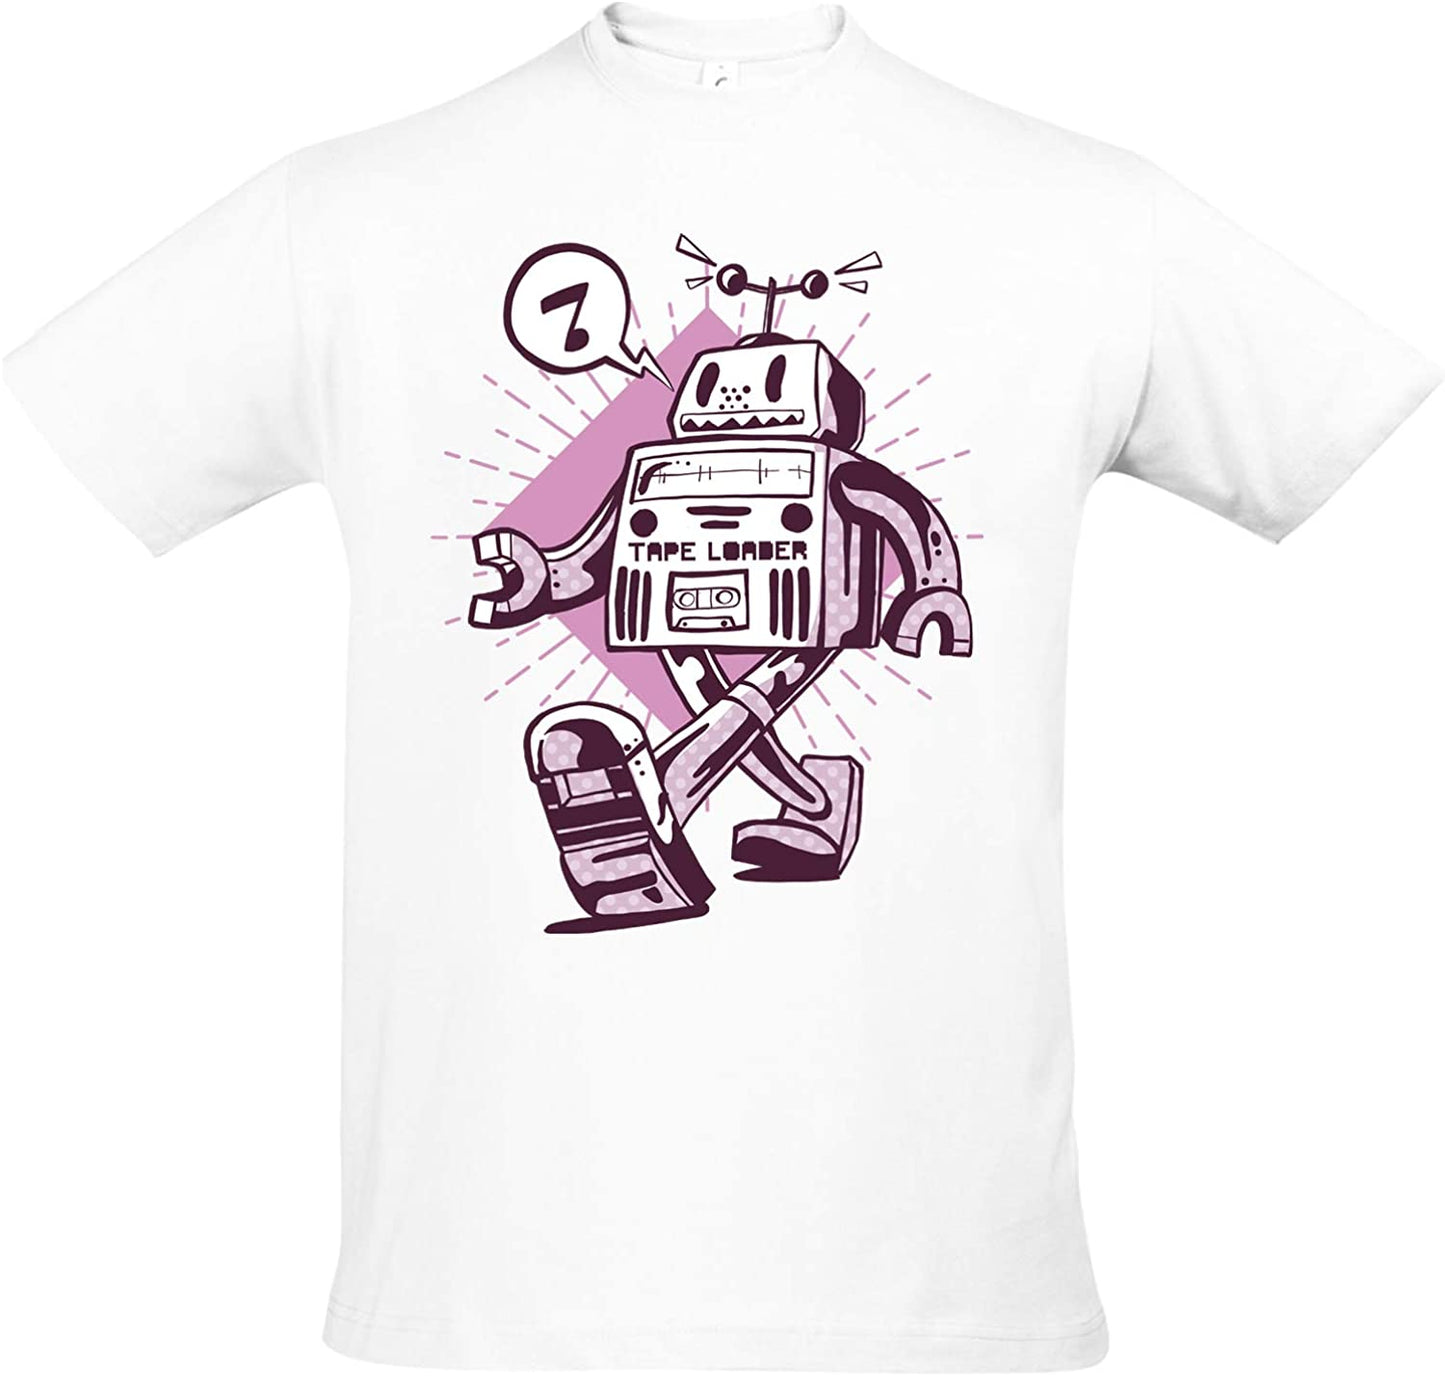 Tape-Roboter T-Shirt, Weiss bedrucktes Shirt eines Roboters mit Kassettendeck, T-Shirt mit Motiv, Lustiges Tshirt, Roboter-T-Shirt (tapebot, S)